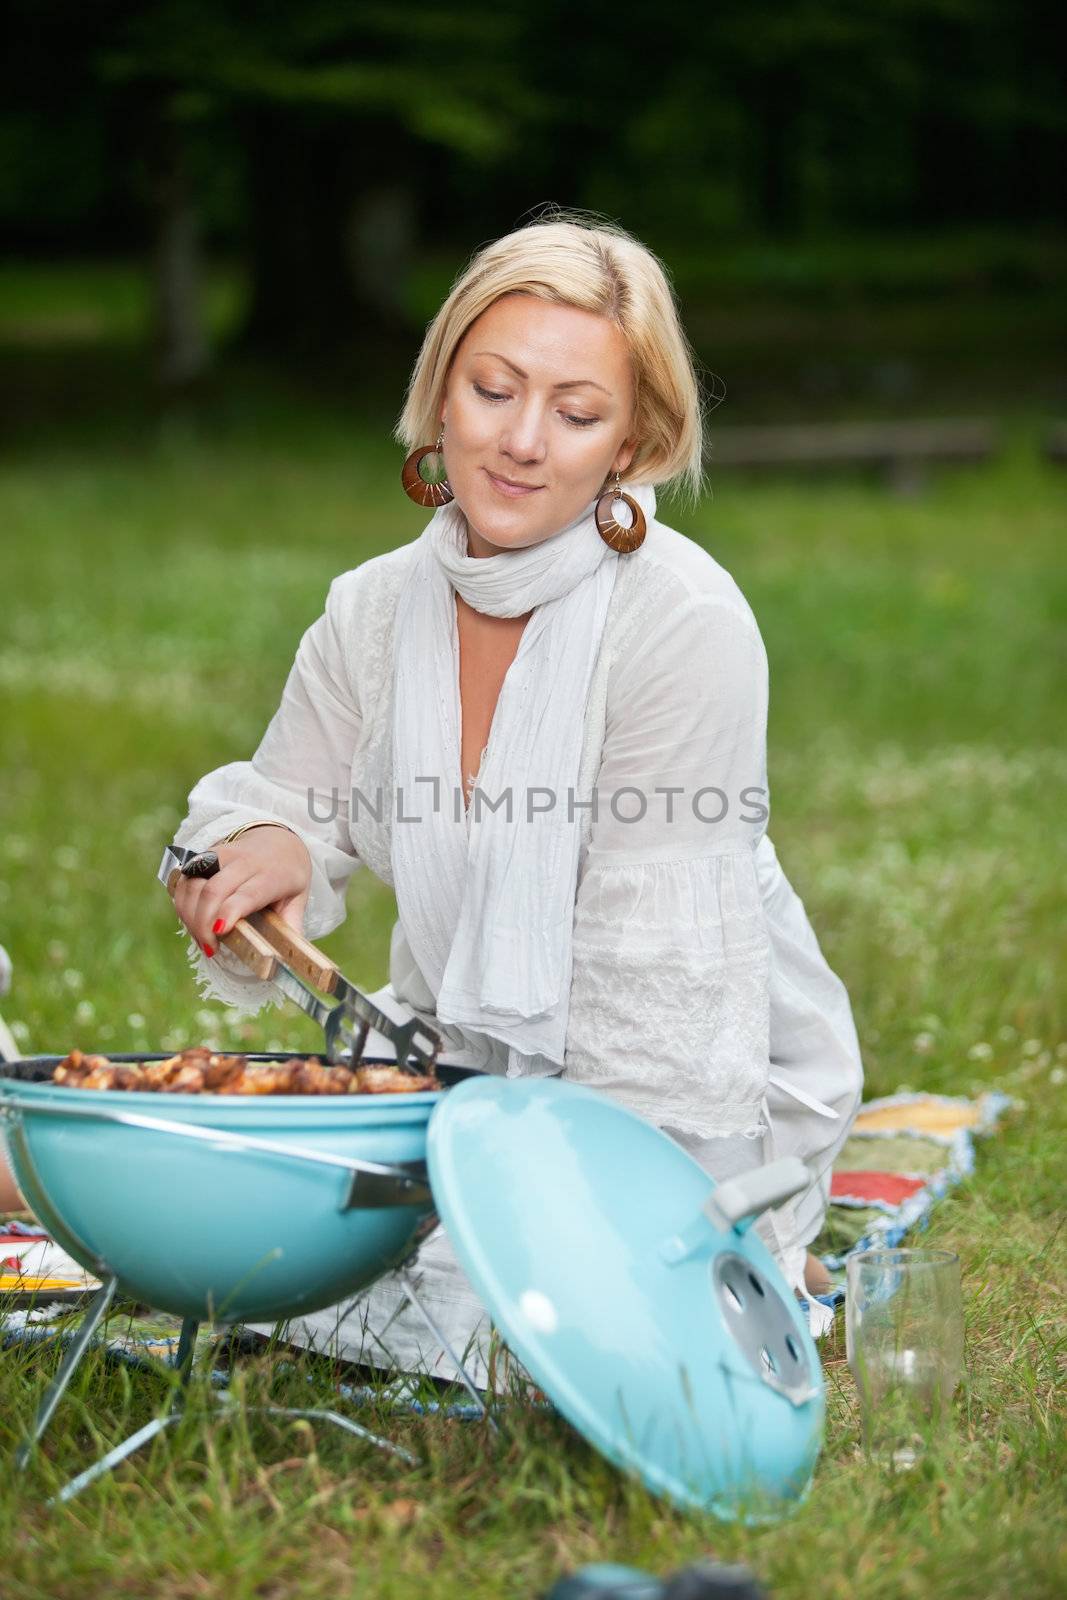 Woman Preparing Food On Barbecue by leaf